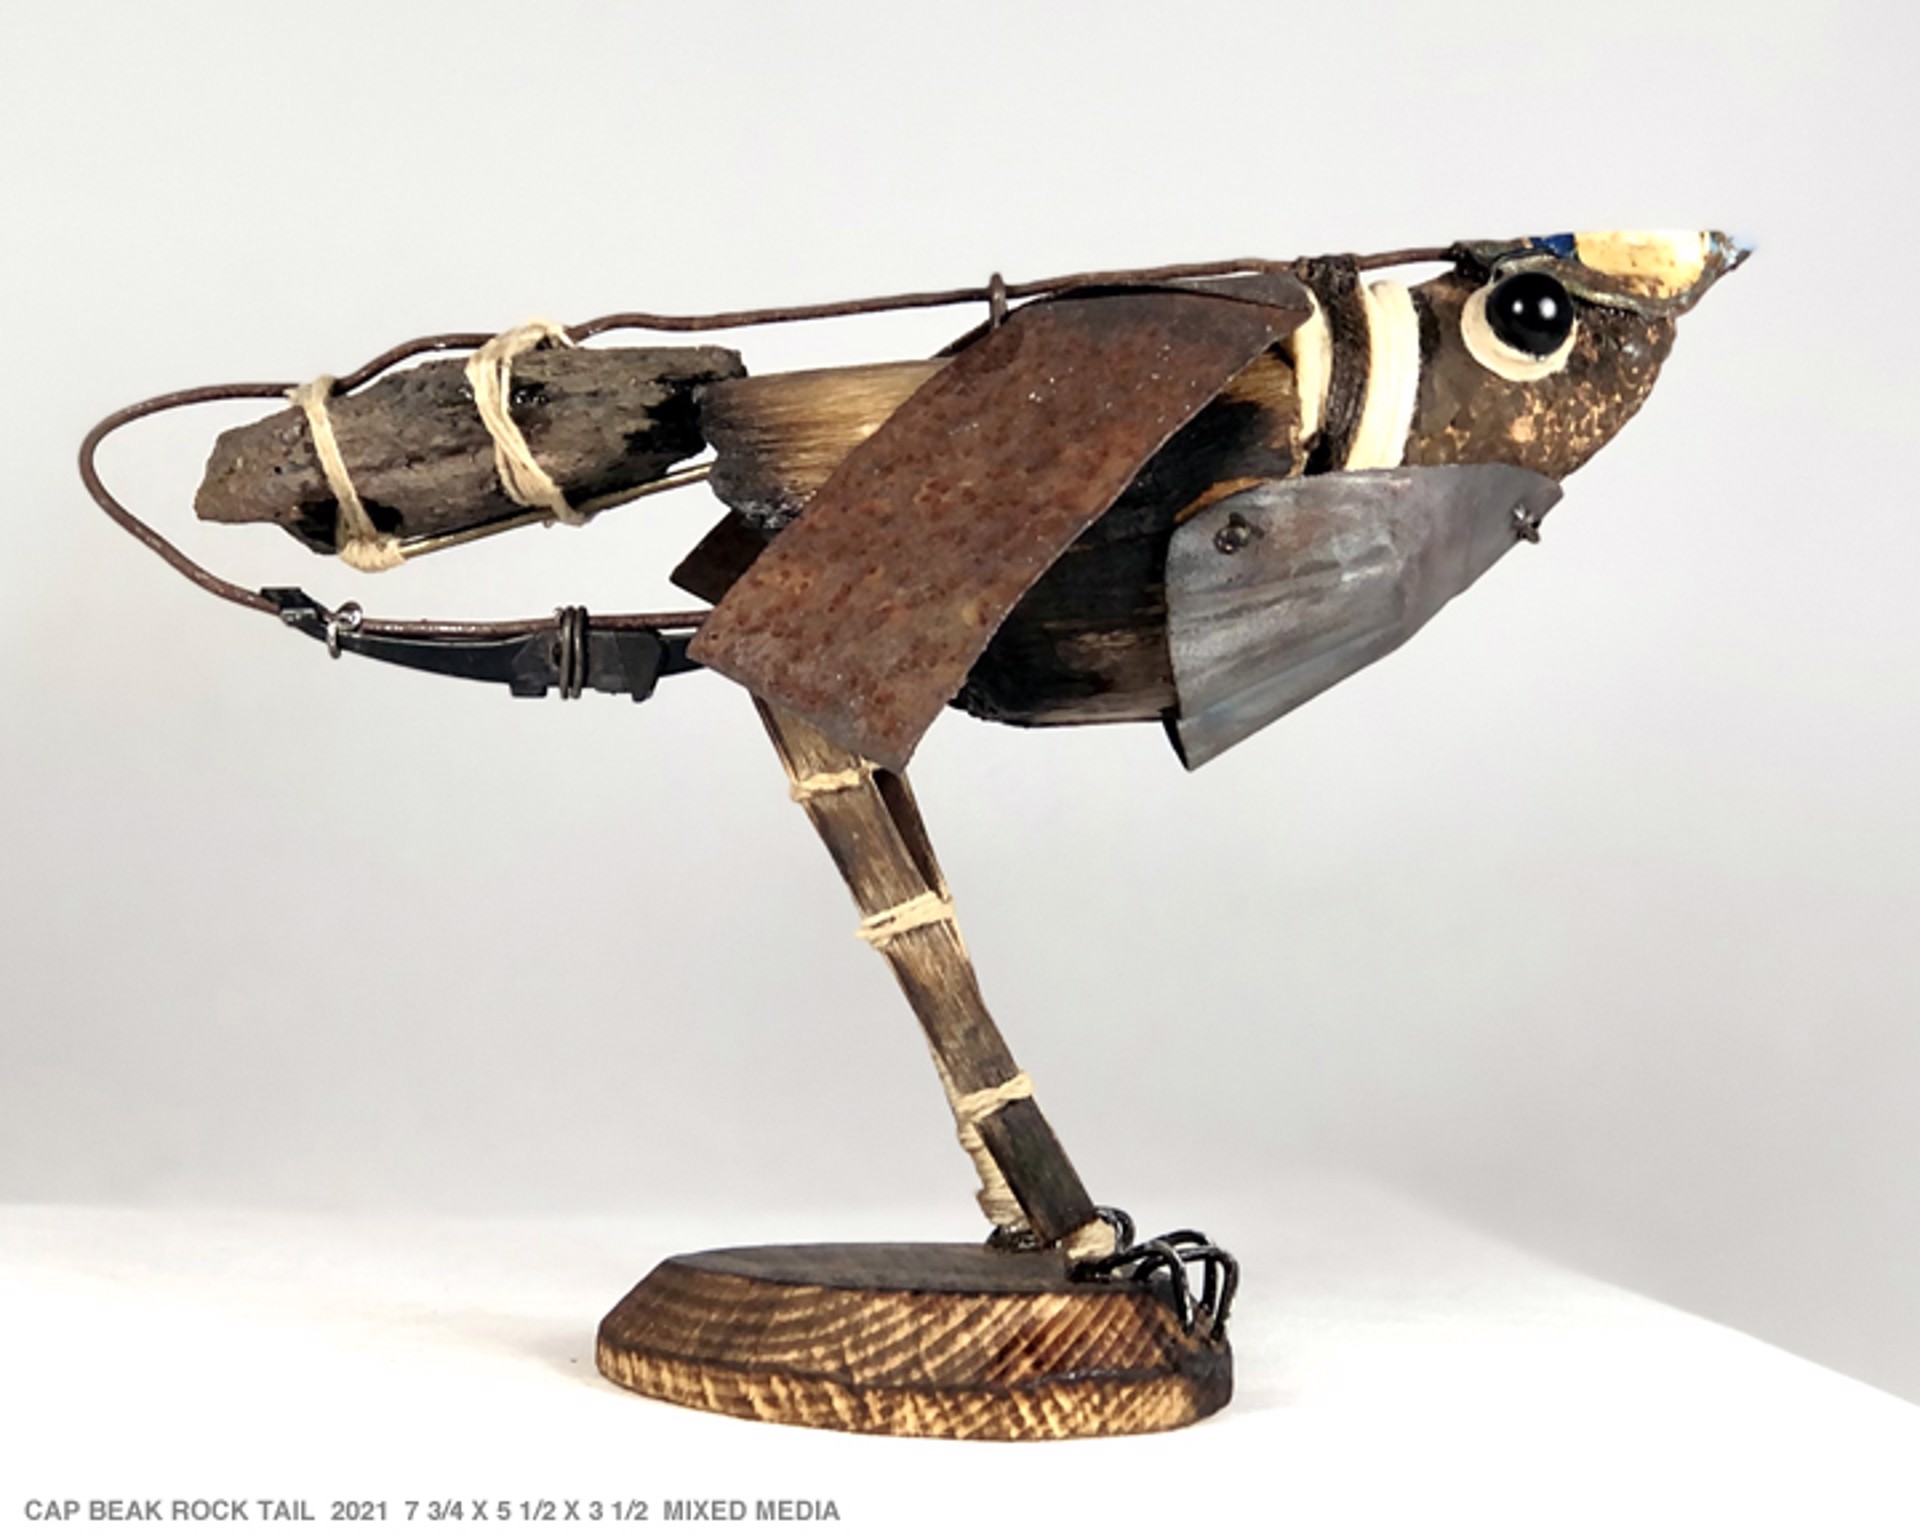 Cap Beak Rock Tail by Andrew Bascle